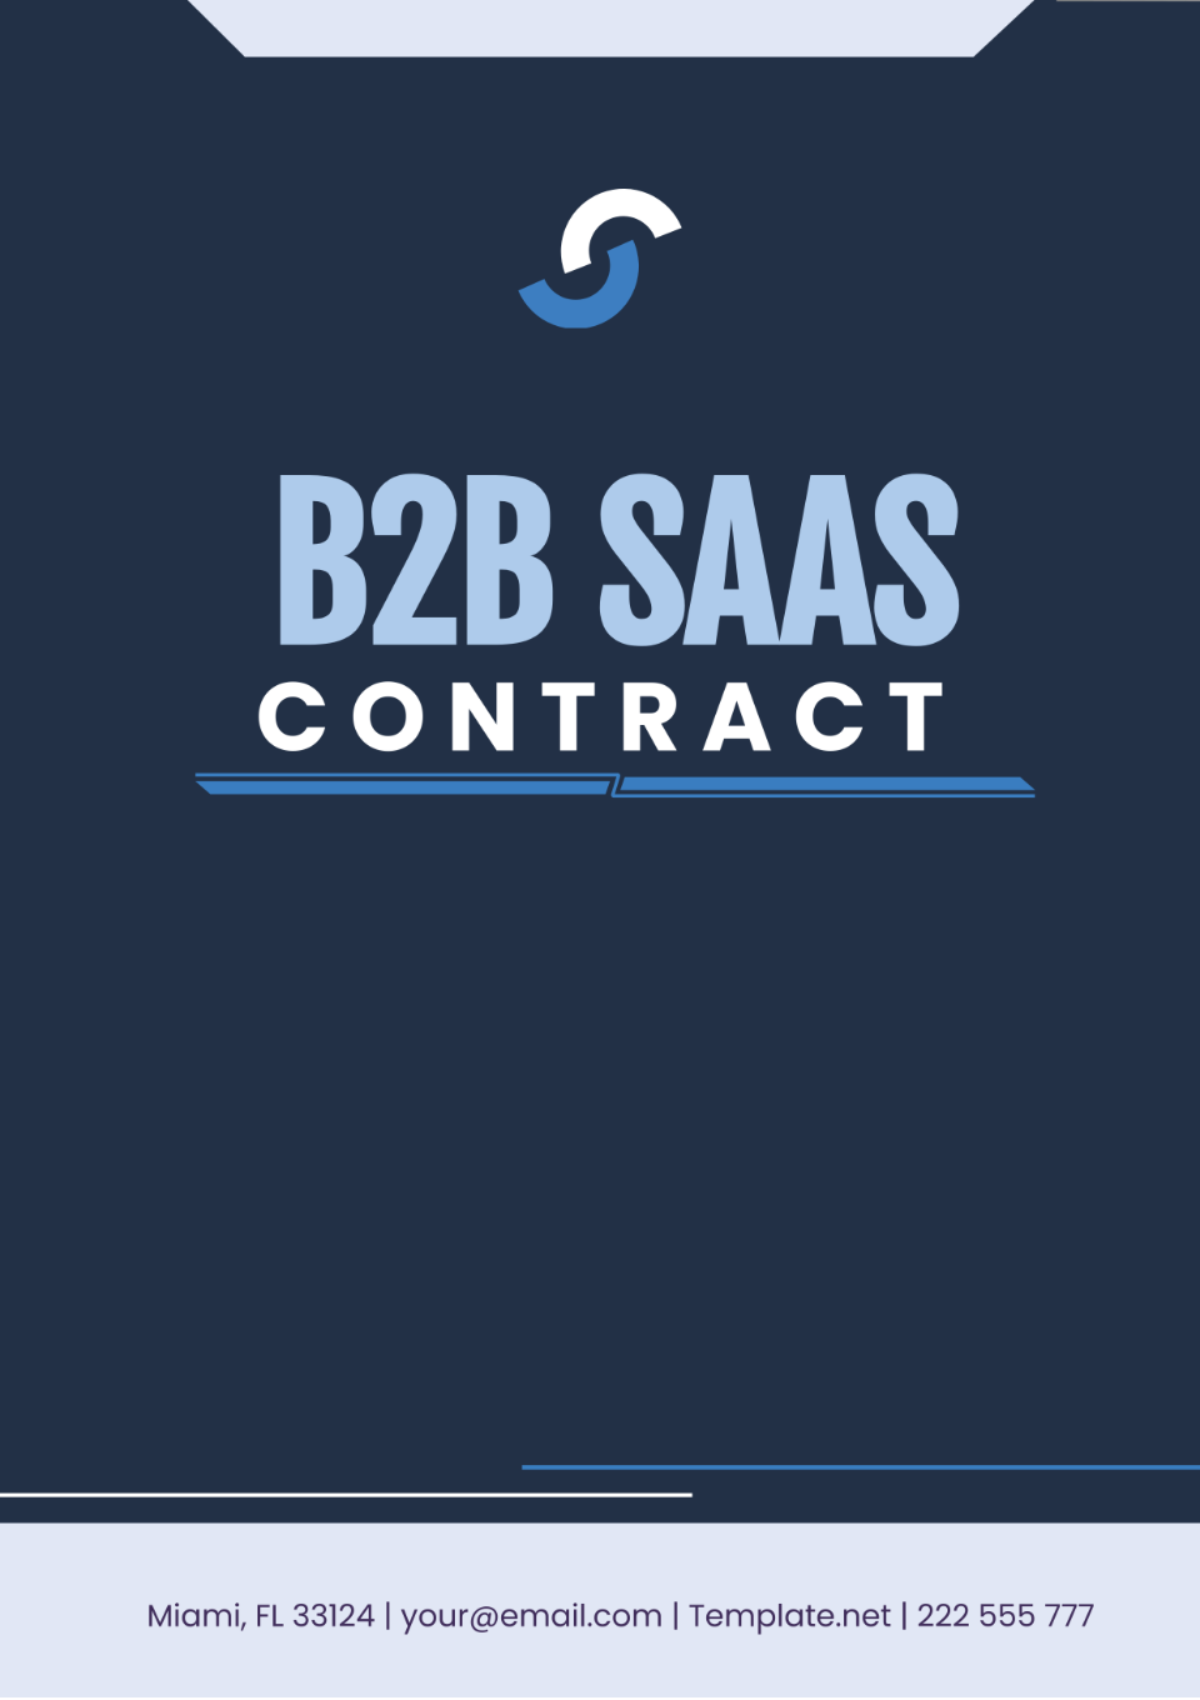 B2B SaaS Contract Template